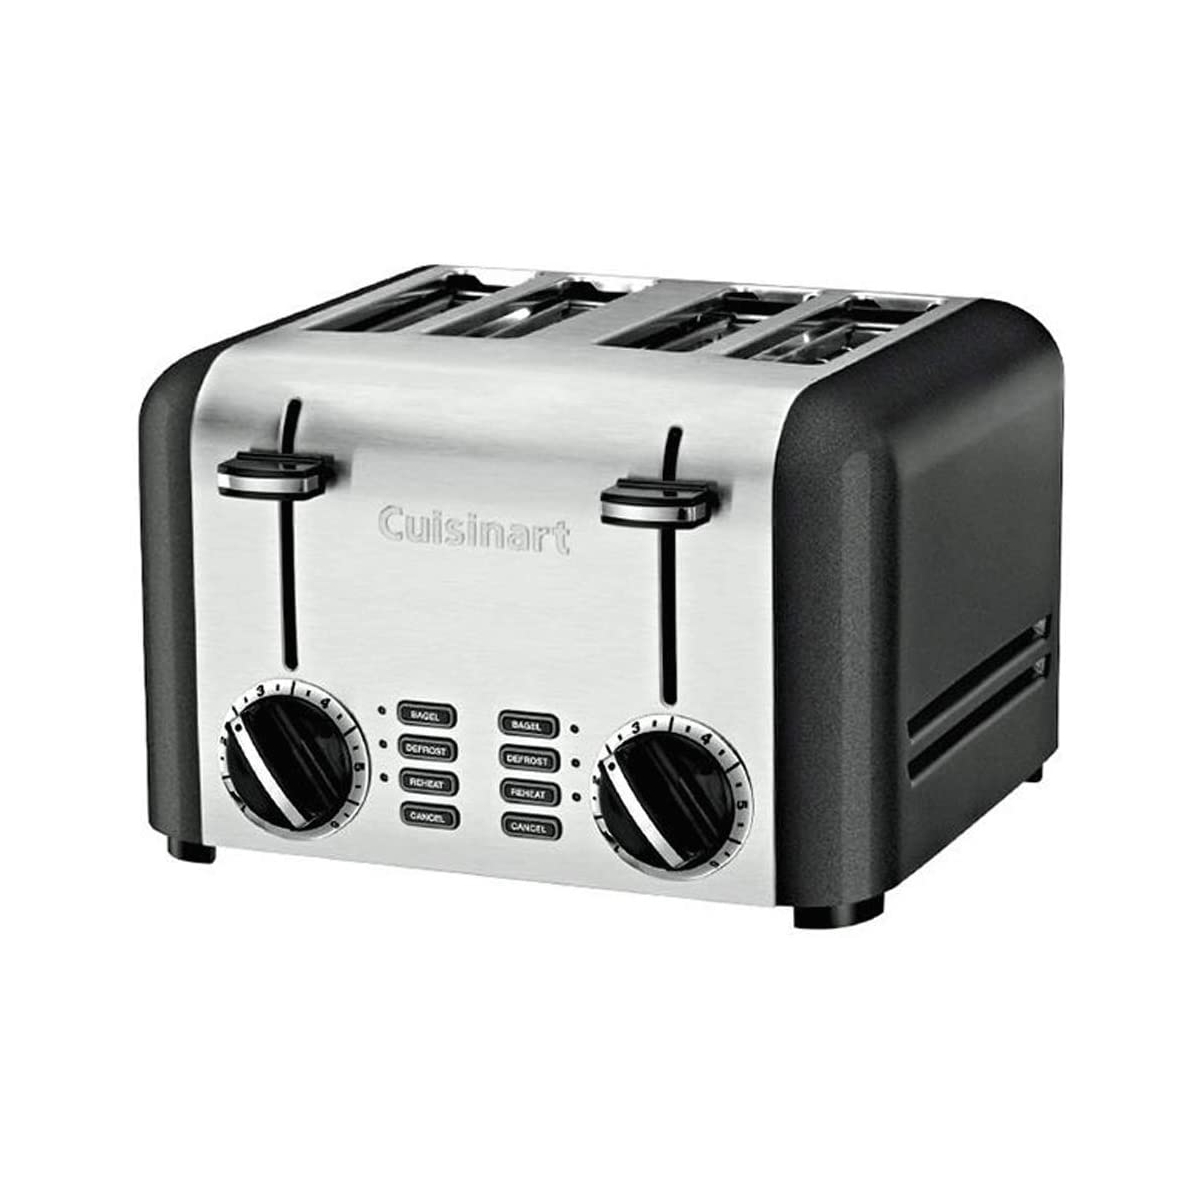 Cuisinart CPT-240TNA Titanium Toaster, Stainless Steel